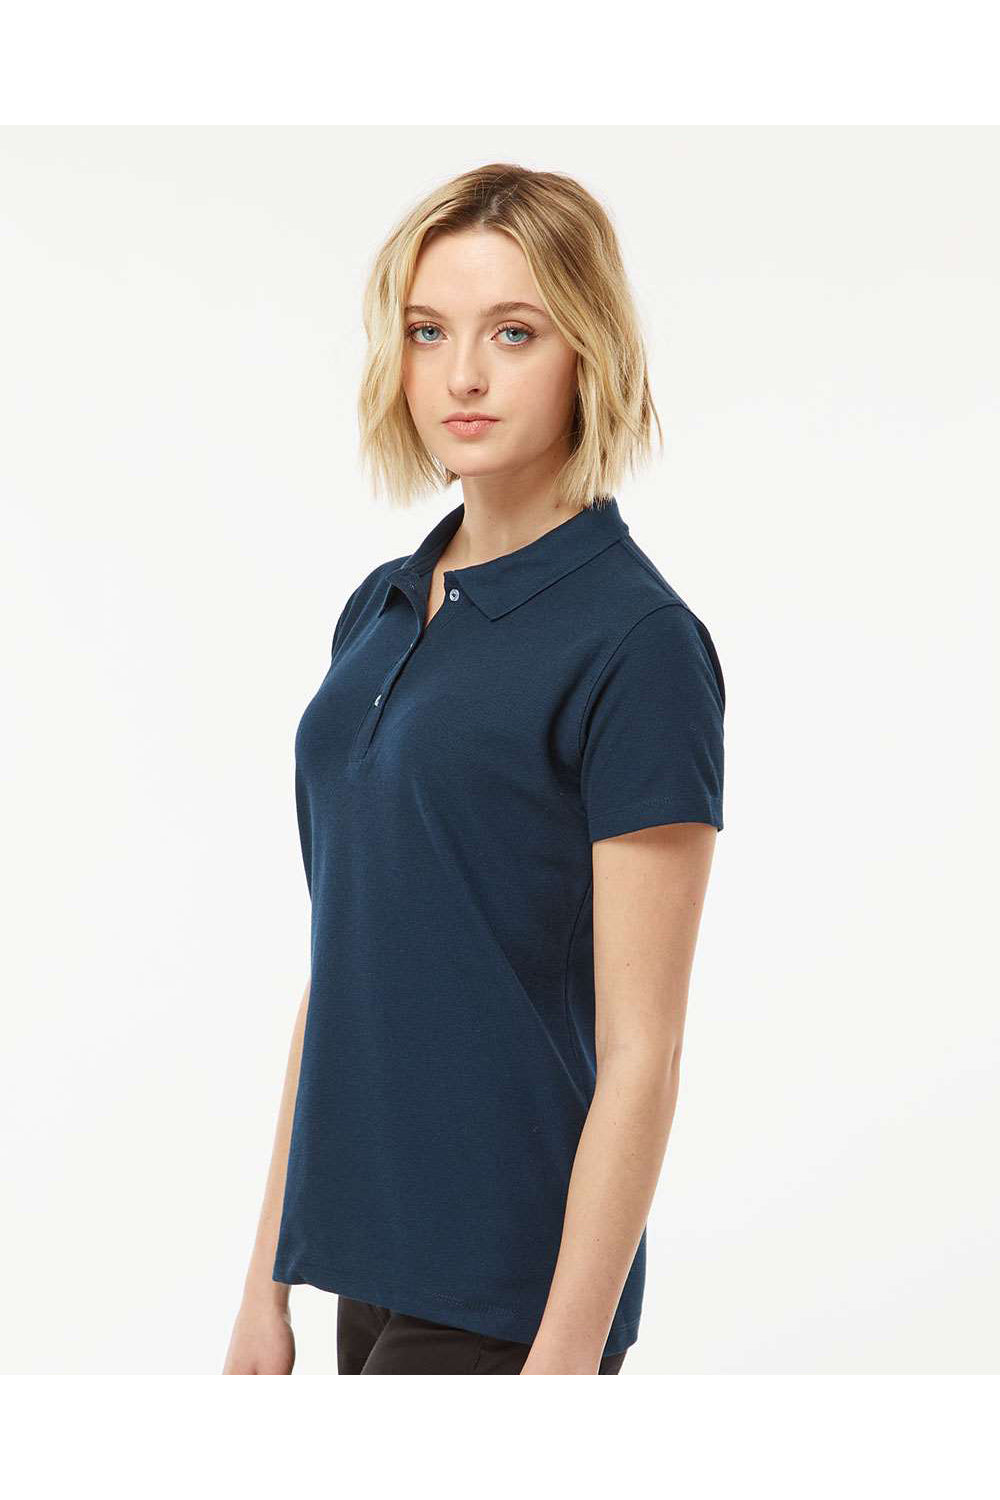 Tultex 401 Womens Sport Shirt Sleeve Polo Shirt Navy Blue Model Side